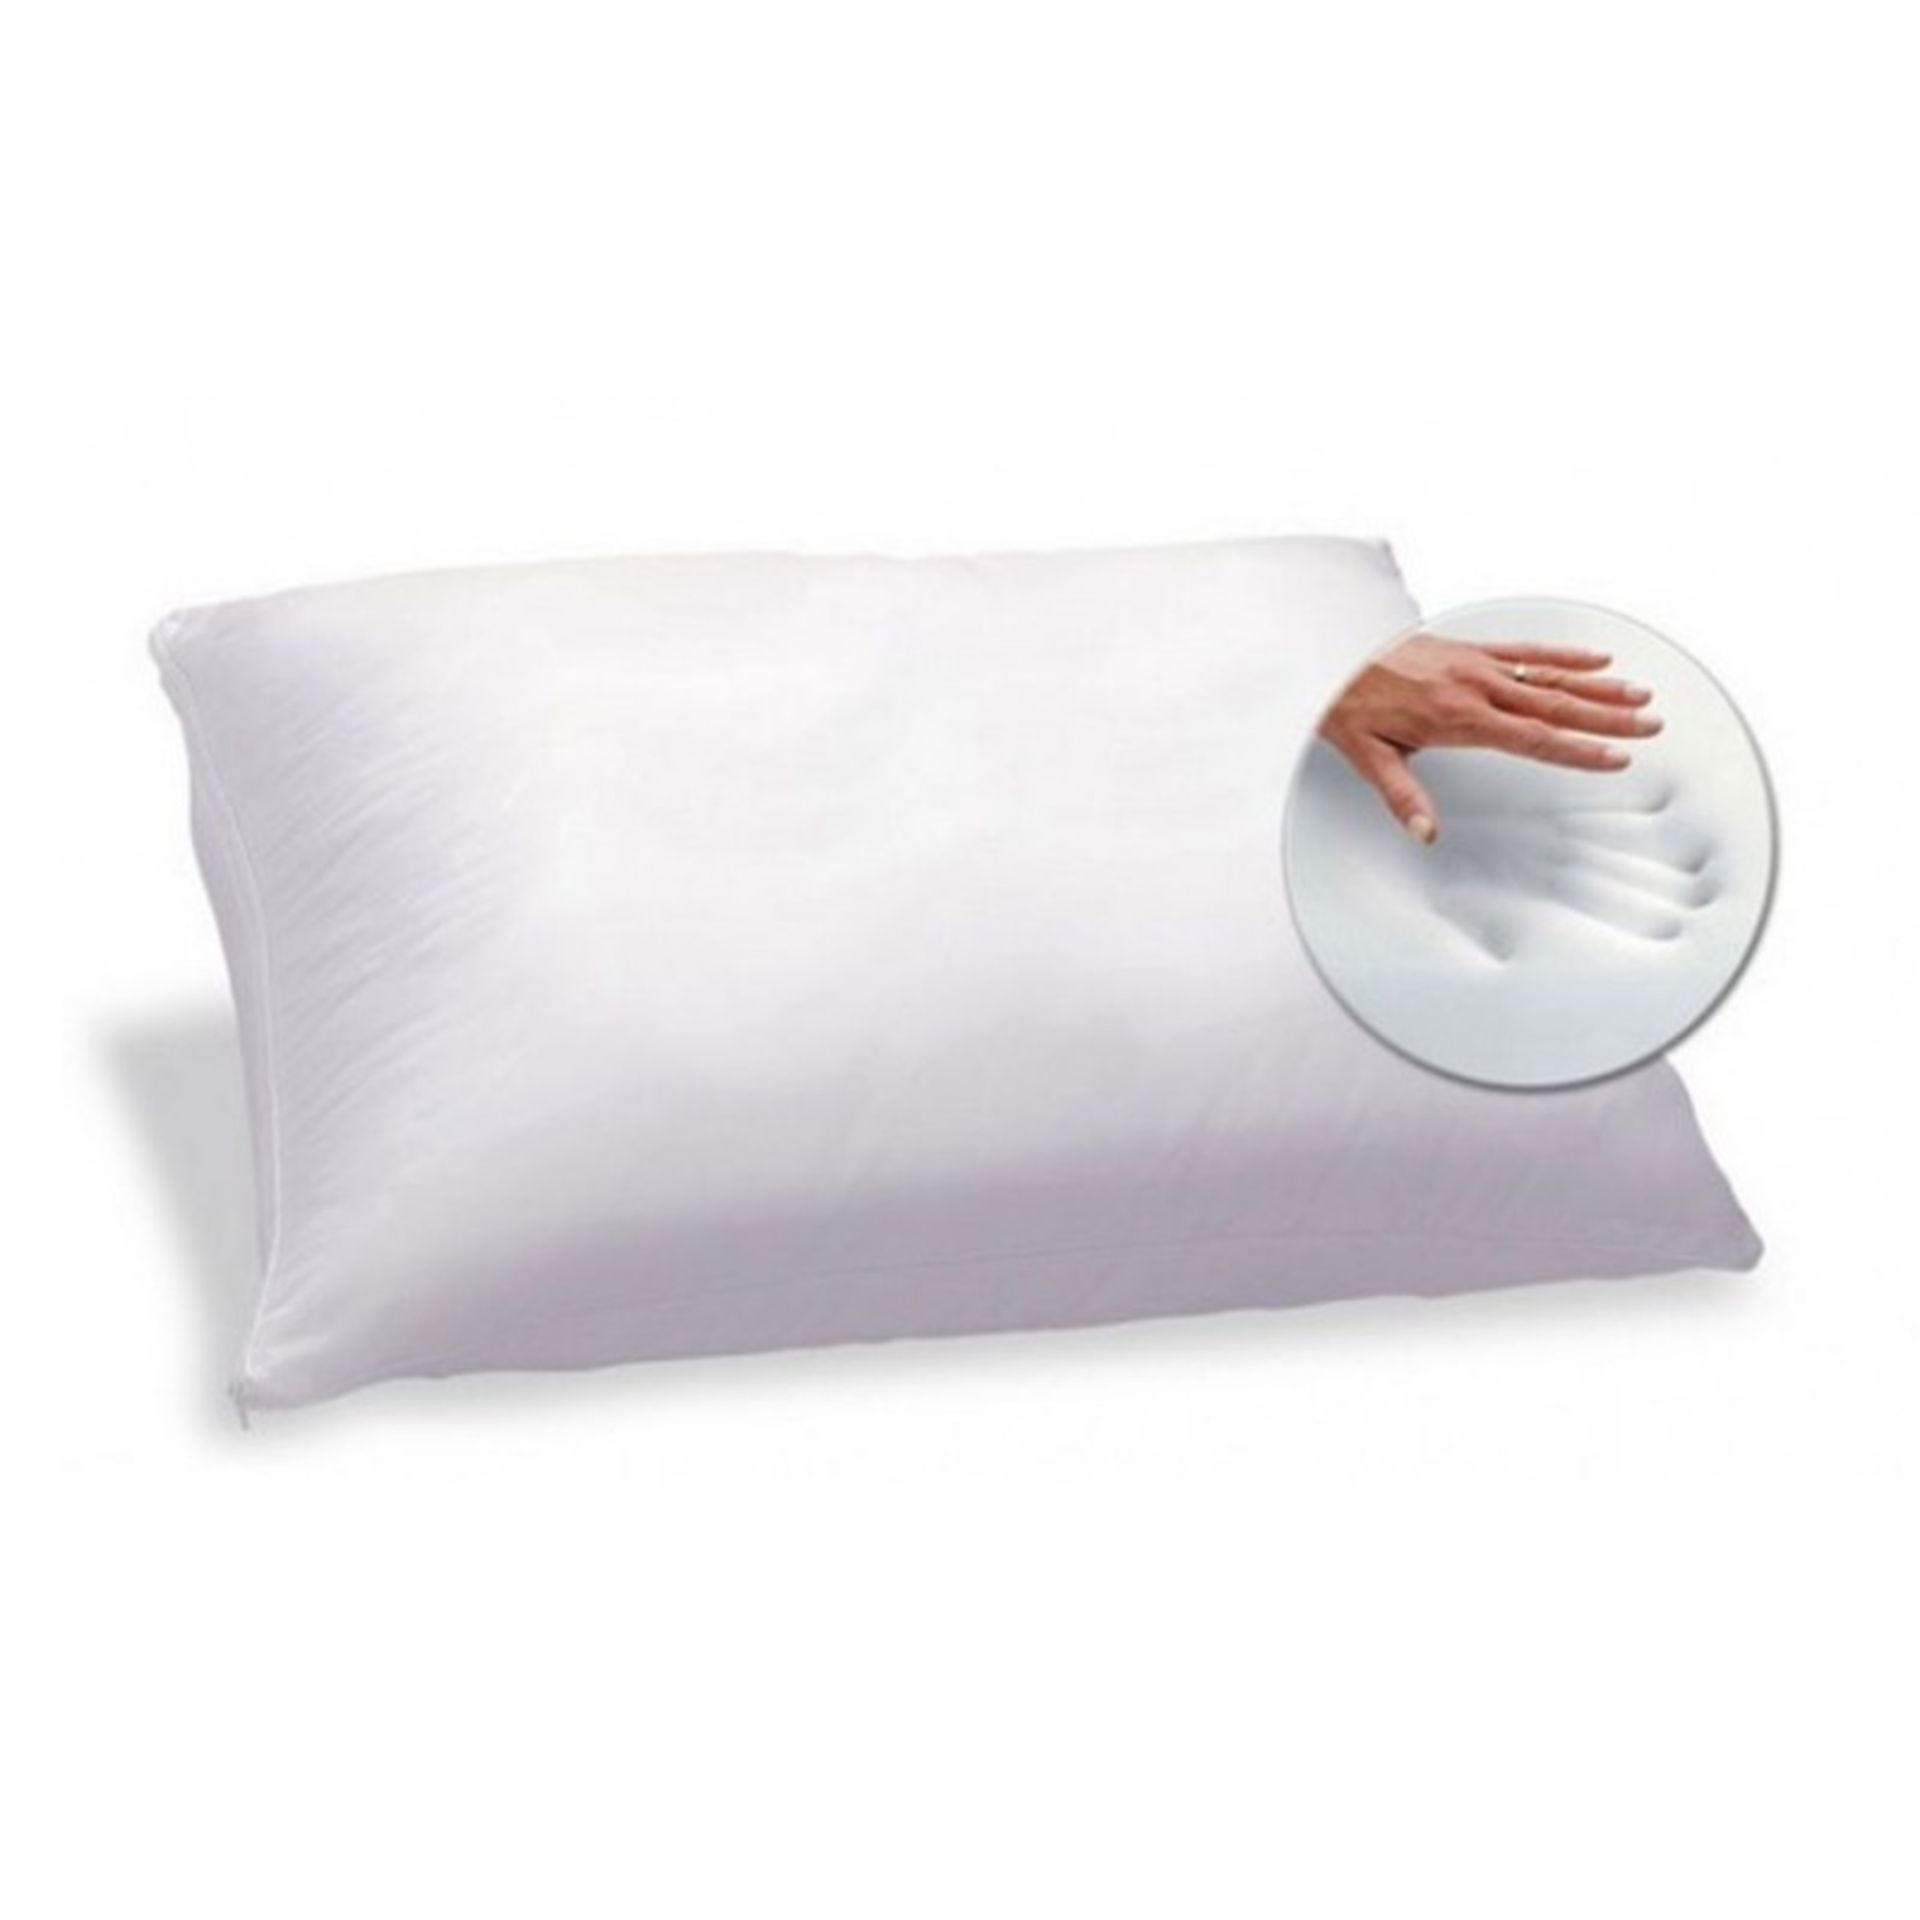 V Brand New Aloe Vera Memory Foam Pillow ISP £16.50 (Ebay) X 2 YOUR BID PRICE TO BE MULTIPLIED BY